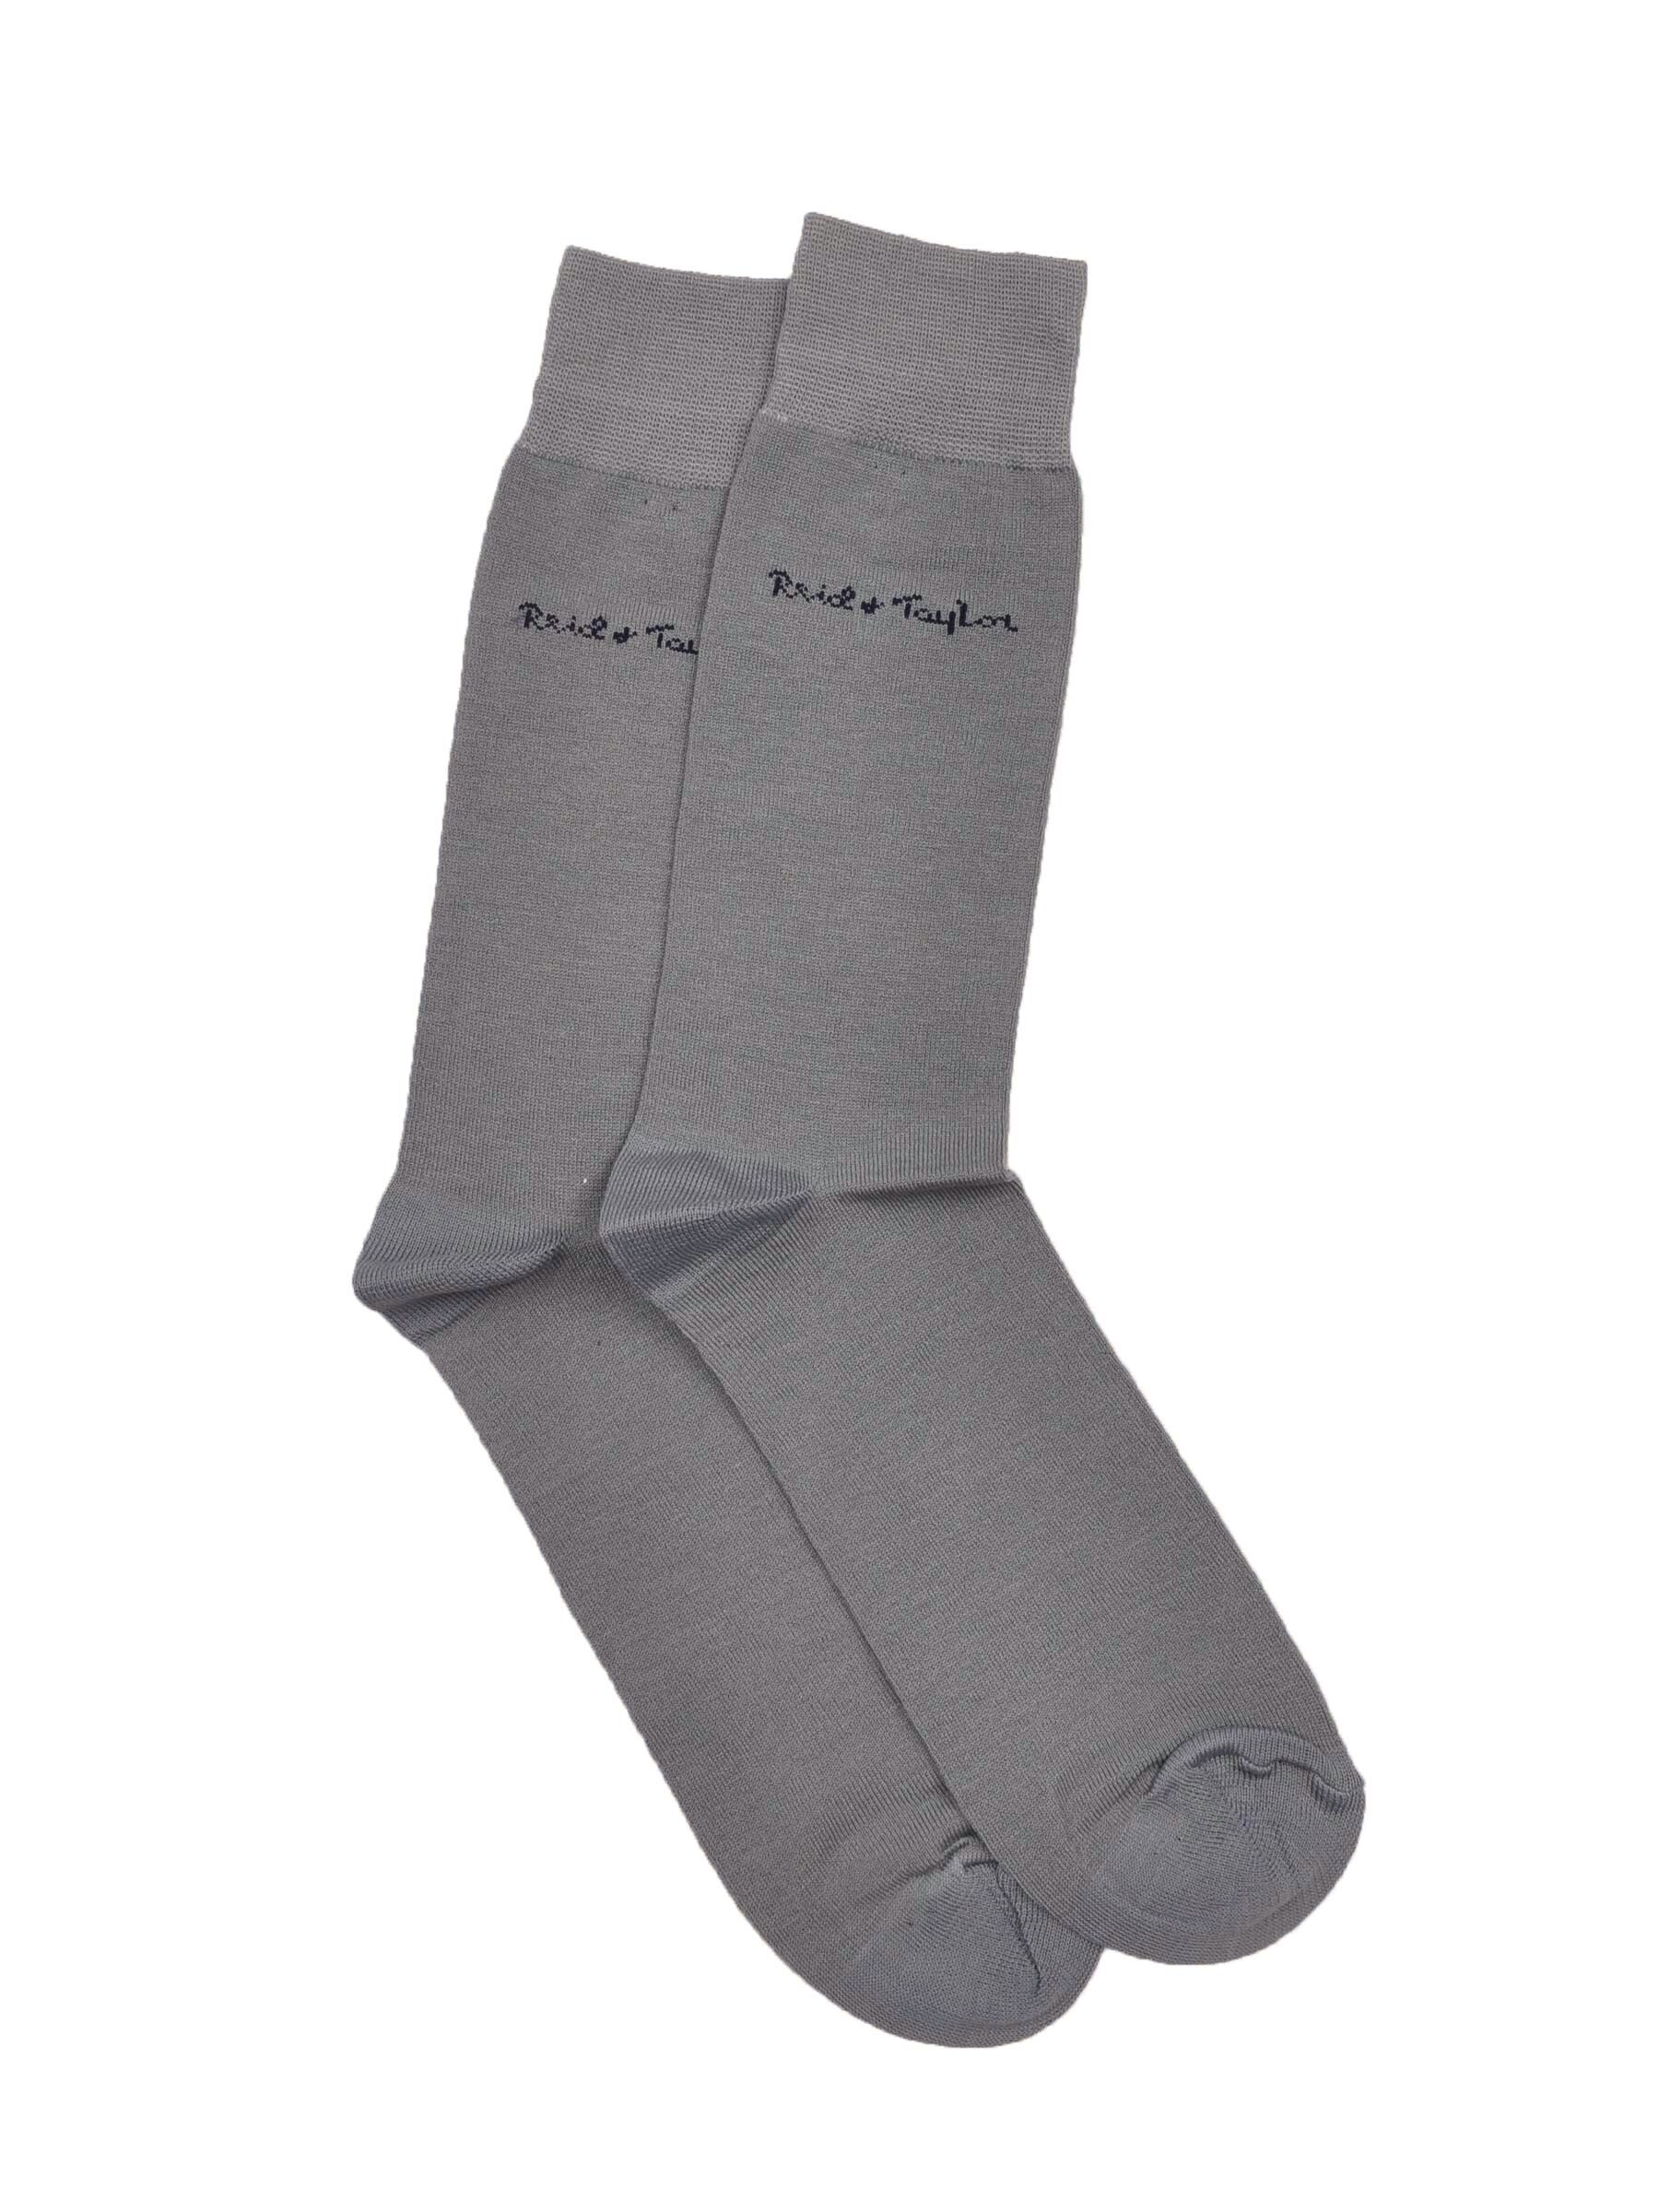 Reid & Taylor Men Solid Grey Socks